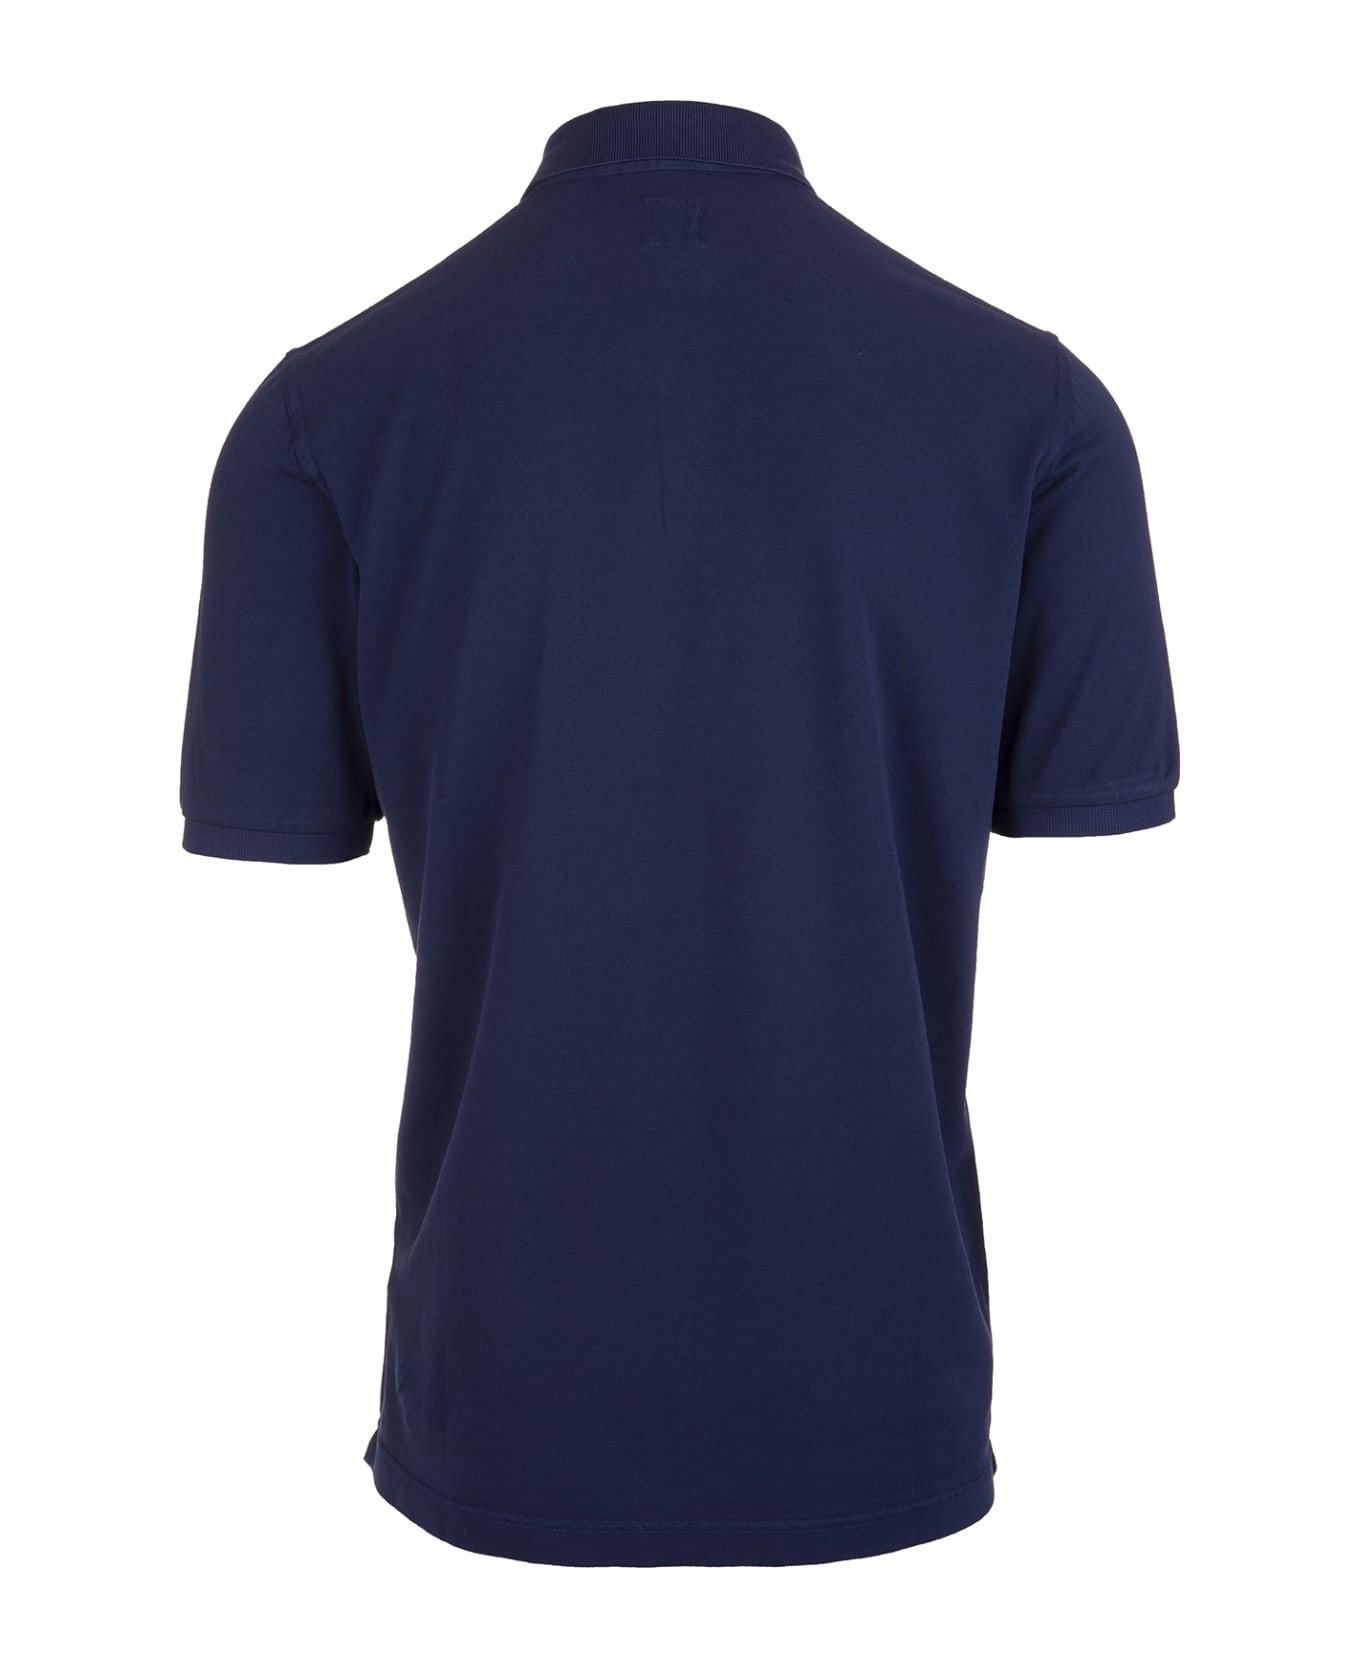 Fedeli Dark Blue Polo Shirt In Light Piqué Cotton - Blue